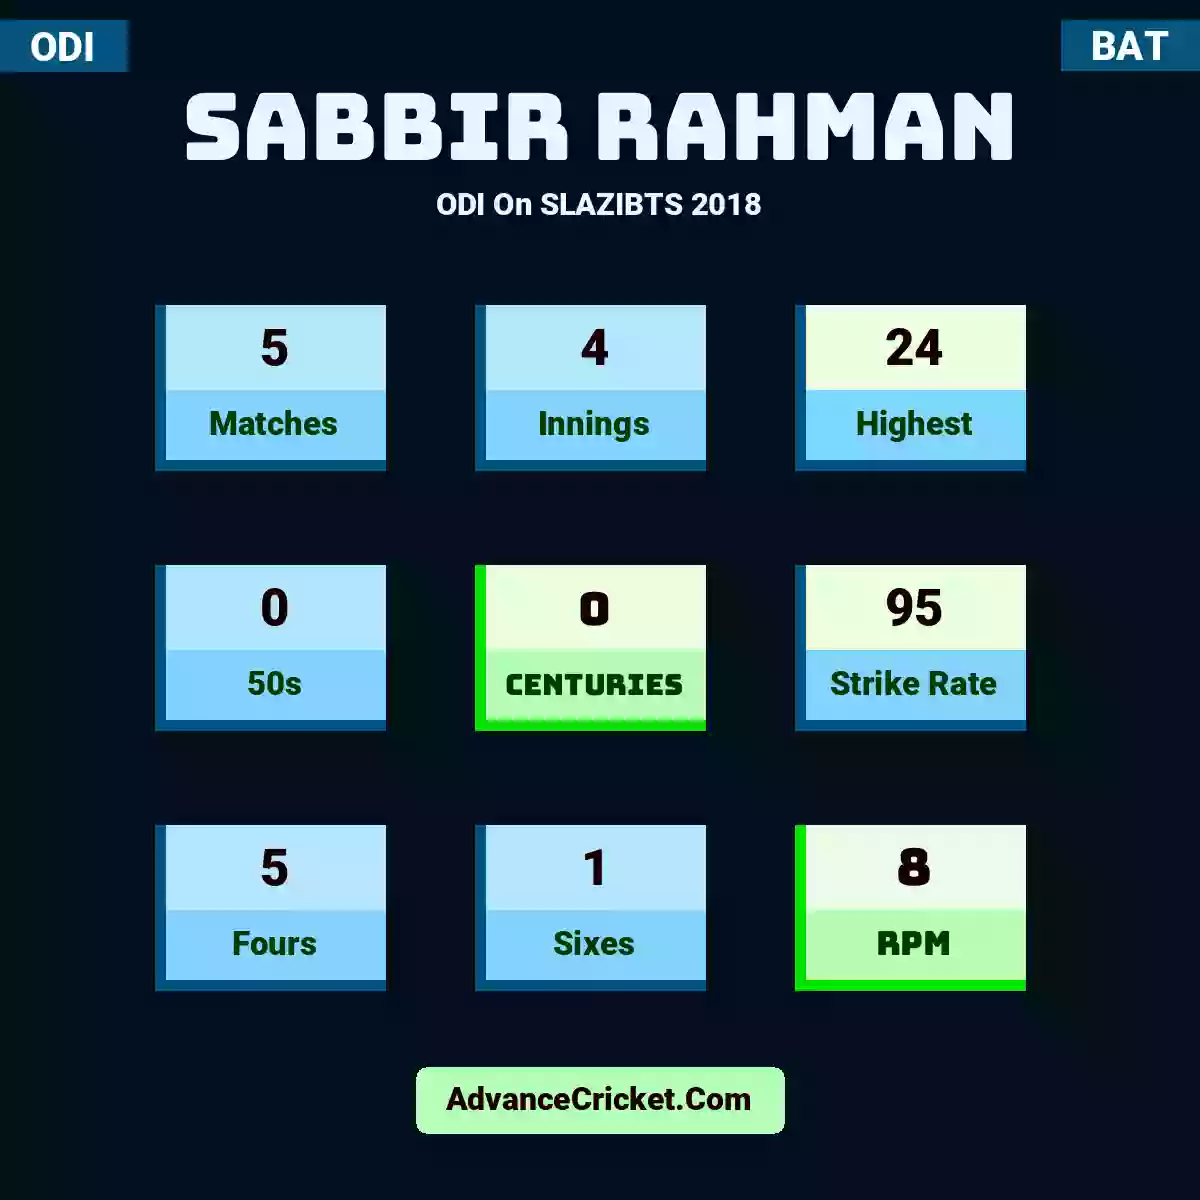 Sabbir Rahman ODI  On SLAZIBTS 2018, Sabbir Rahman played 5 matches, scored 24 runs as highest, 0 half-centuries, and 0 centuries, with a strike rate of 95. S.Rahman hit 5 fours and 1 sixes, with an RPM of 8.